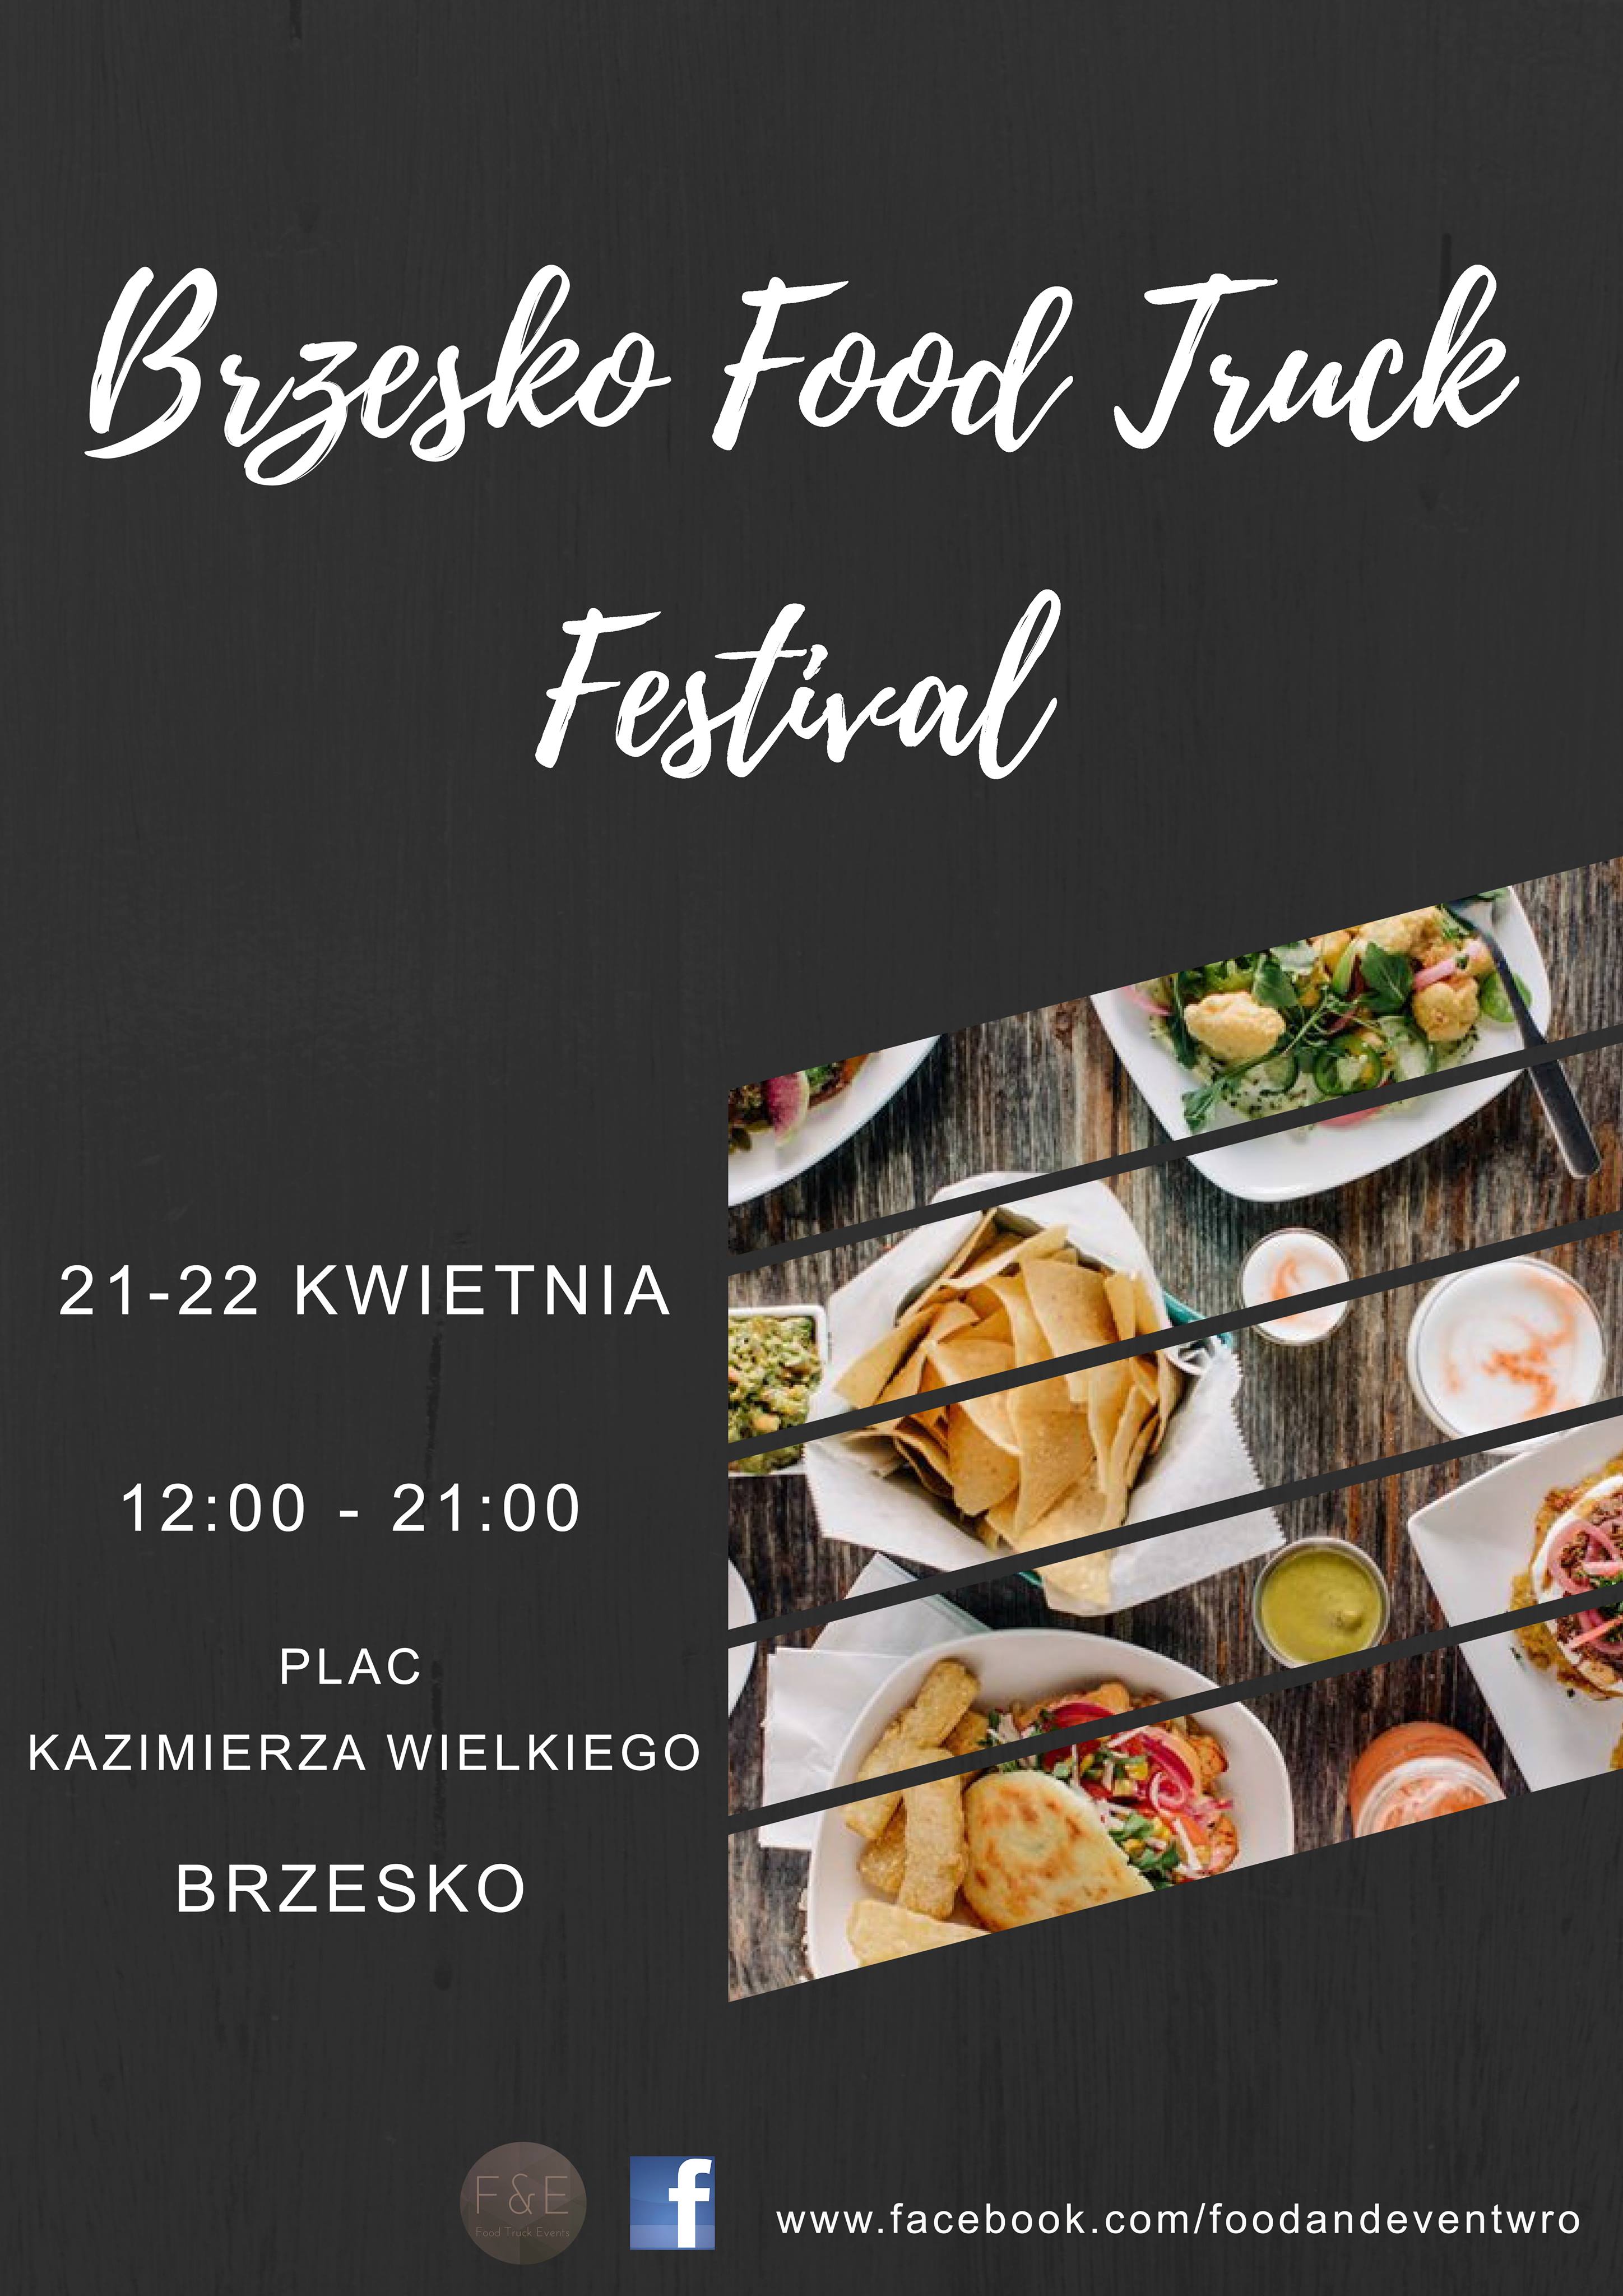 Brzesko Food Truck Festiwal